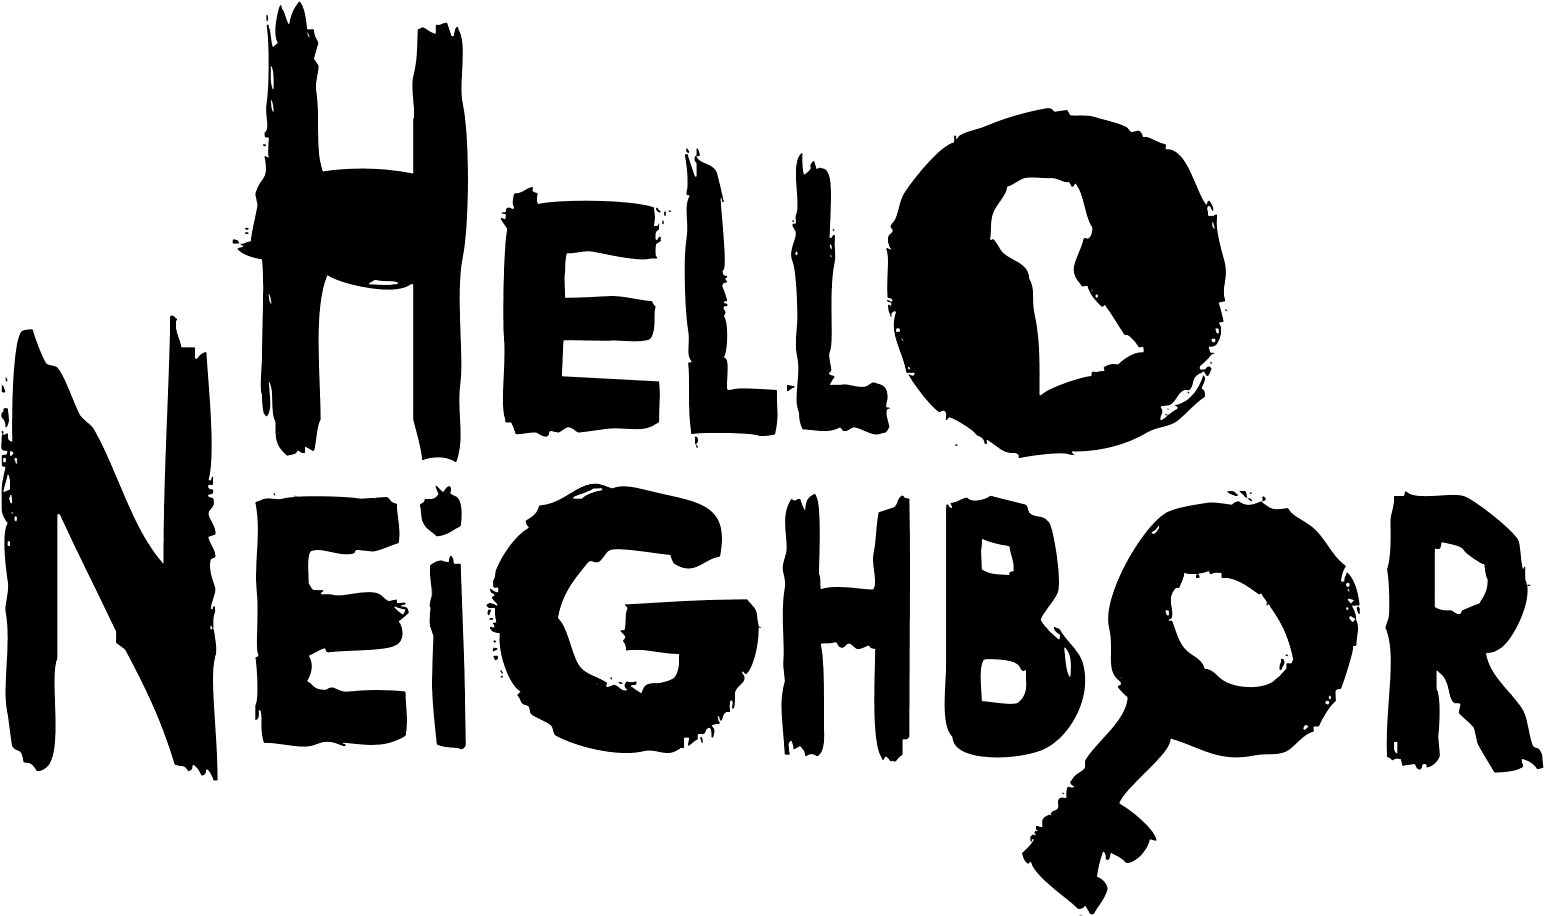 Хеллоу мер. Hello Neighbor 2 лого. Привет сосед значок. Привет сосед надпись. Привет сосед без фона.